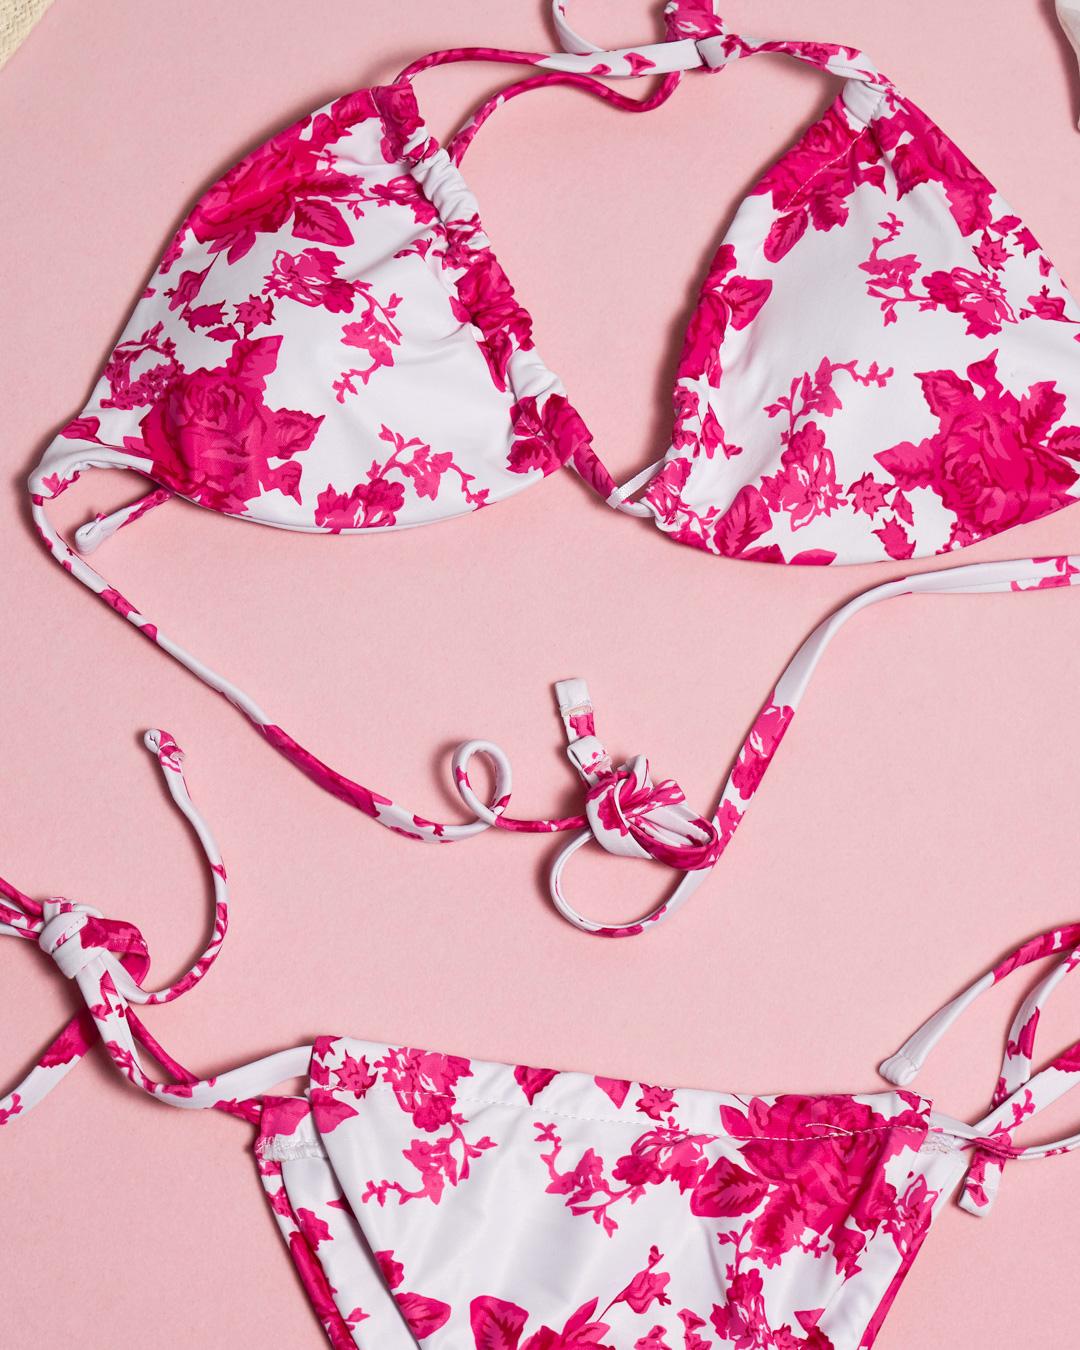 Floral Print Halter Tie Side Bikini Sets